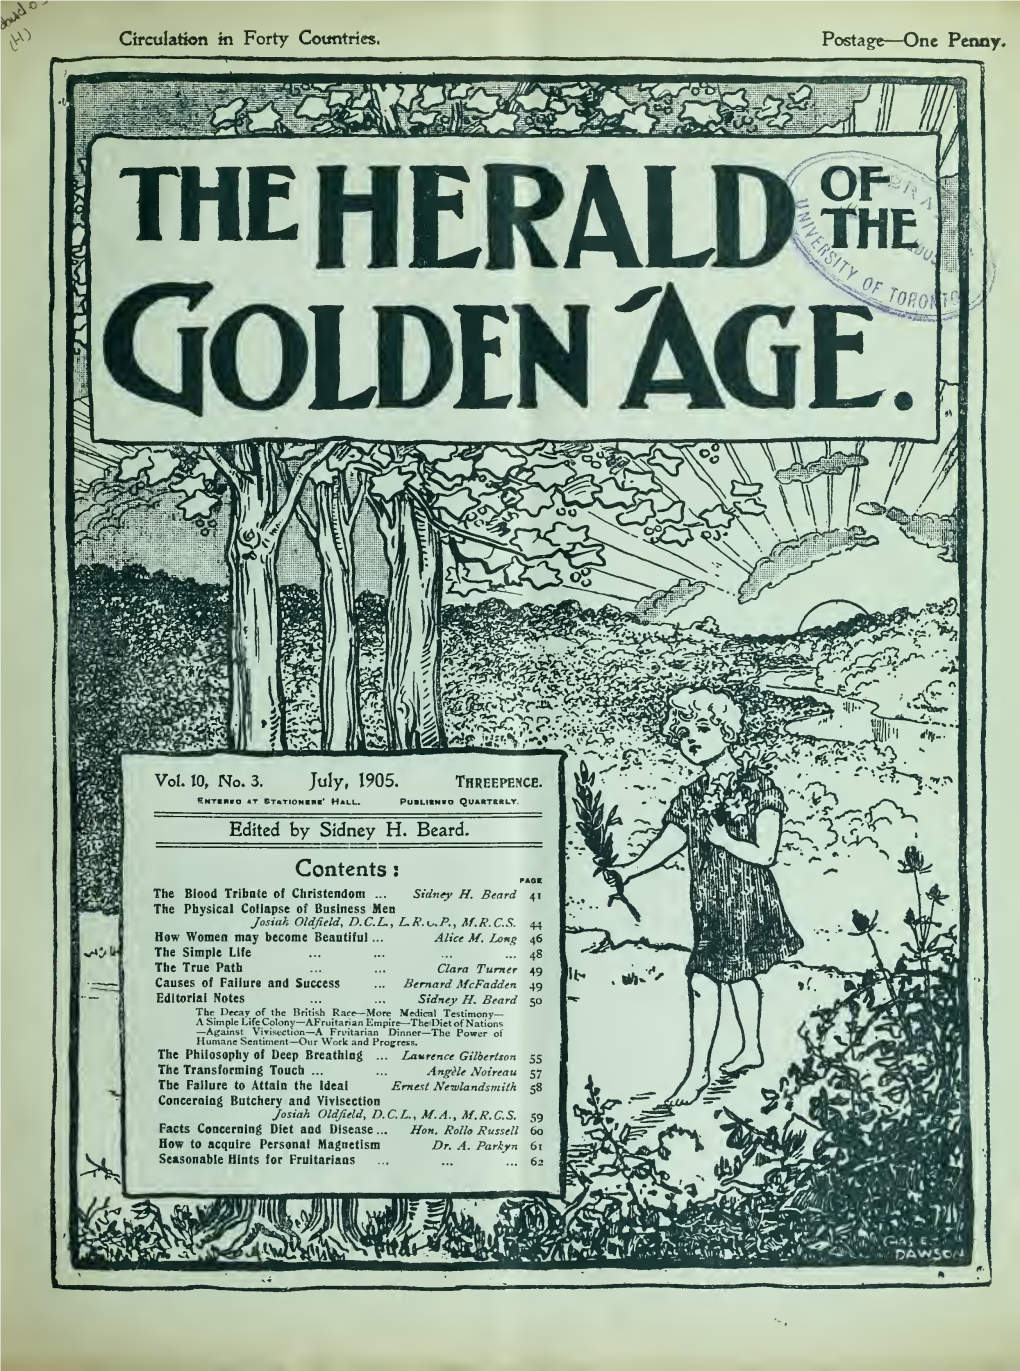 Herald of the Golden Age V10 N3 Jul 1905